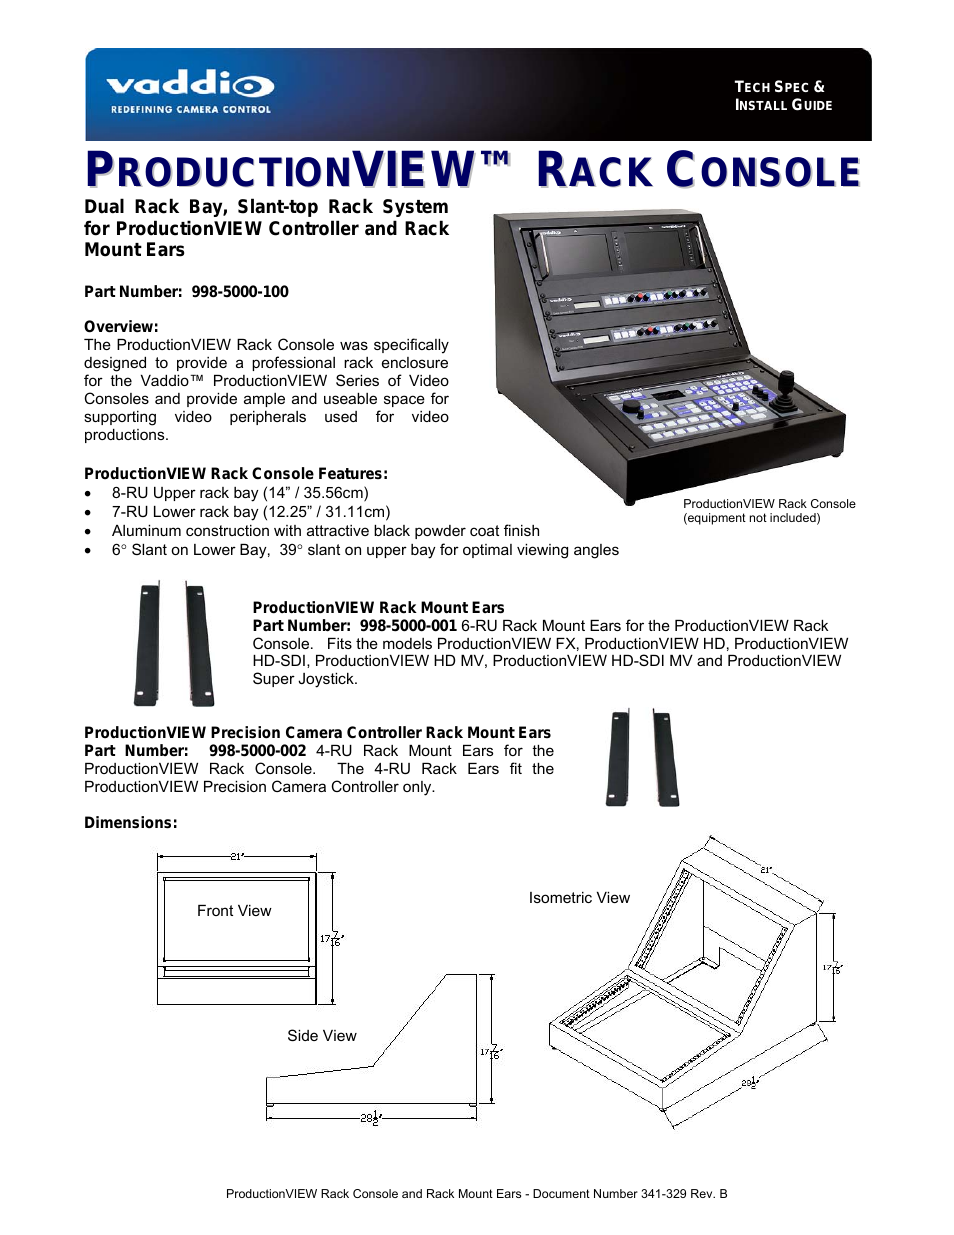 ProductionVIEW Rack Console